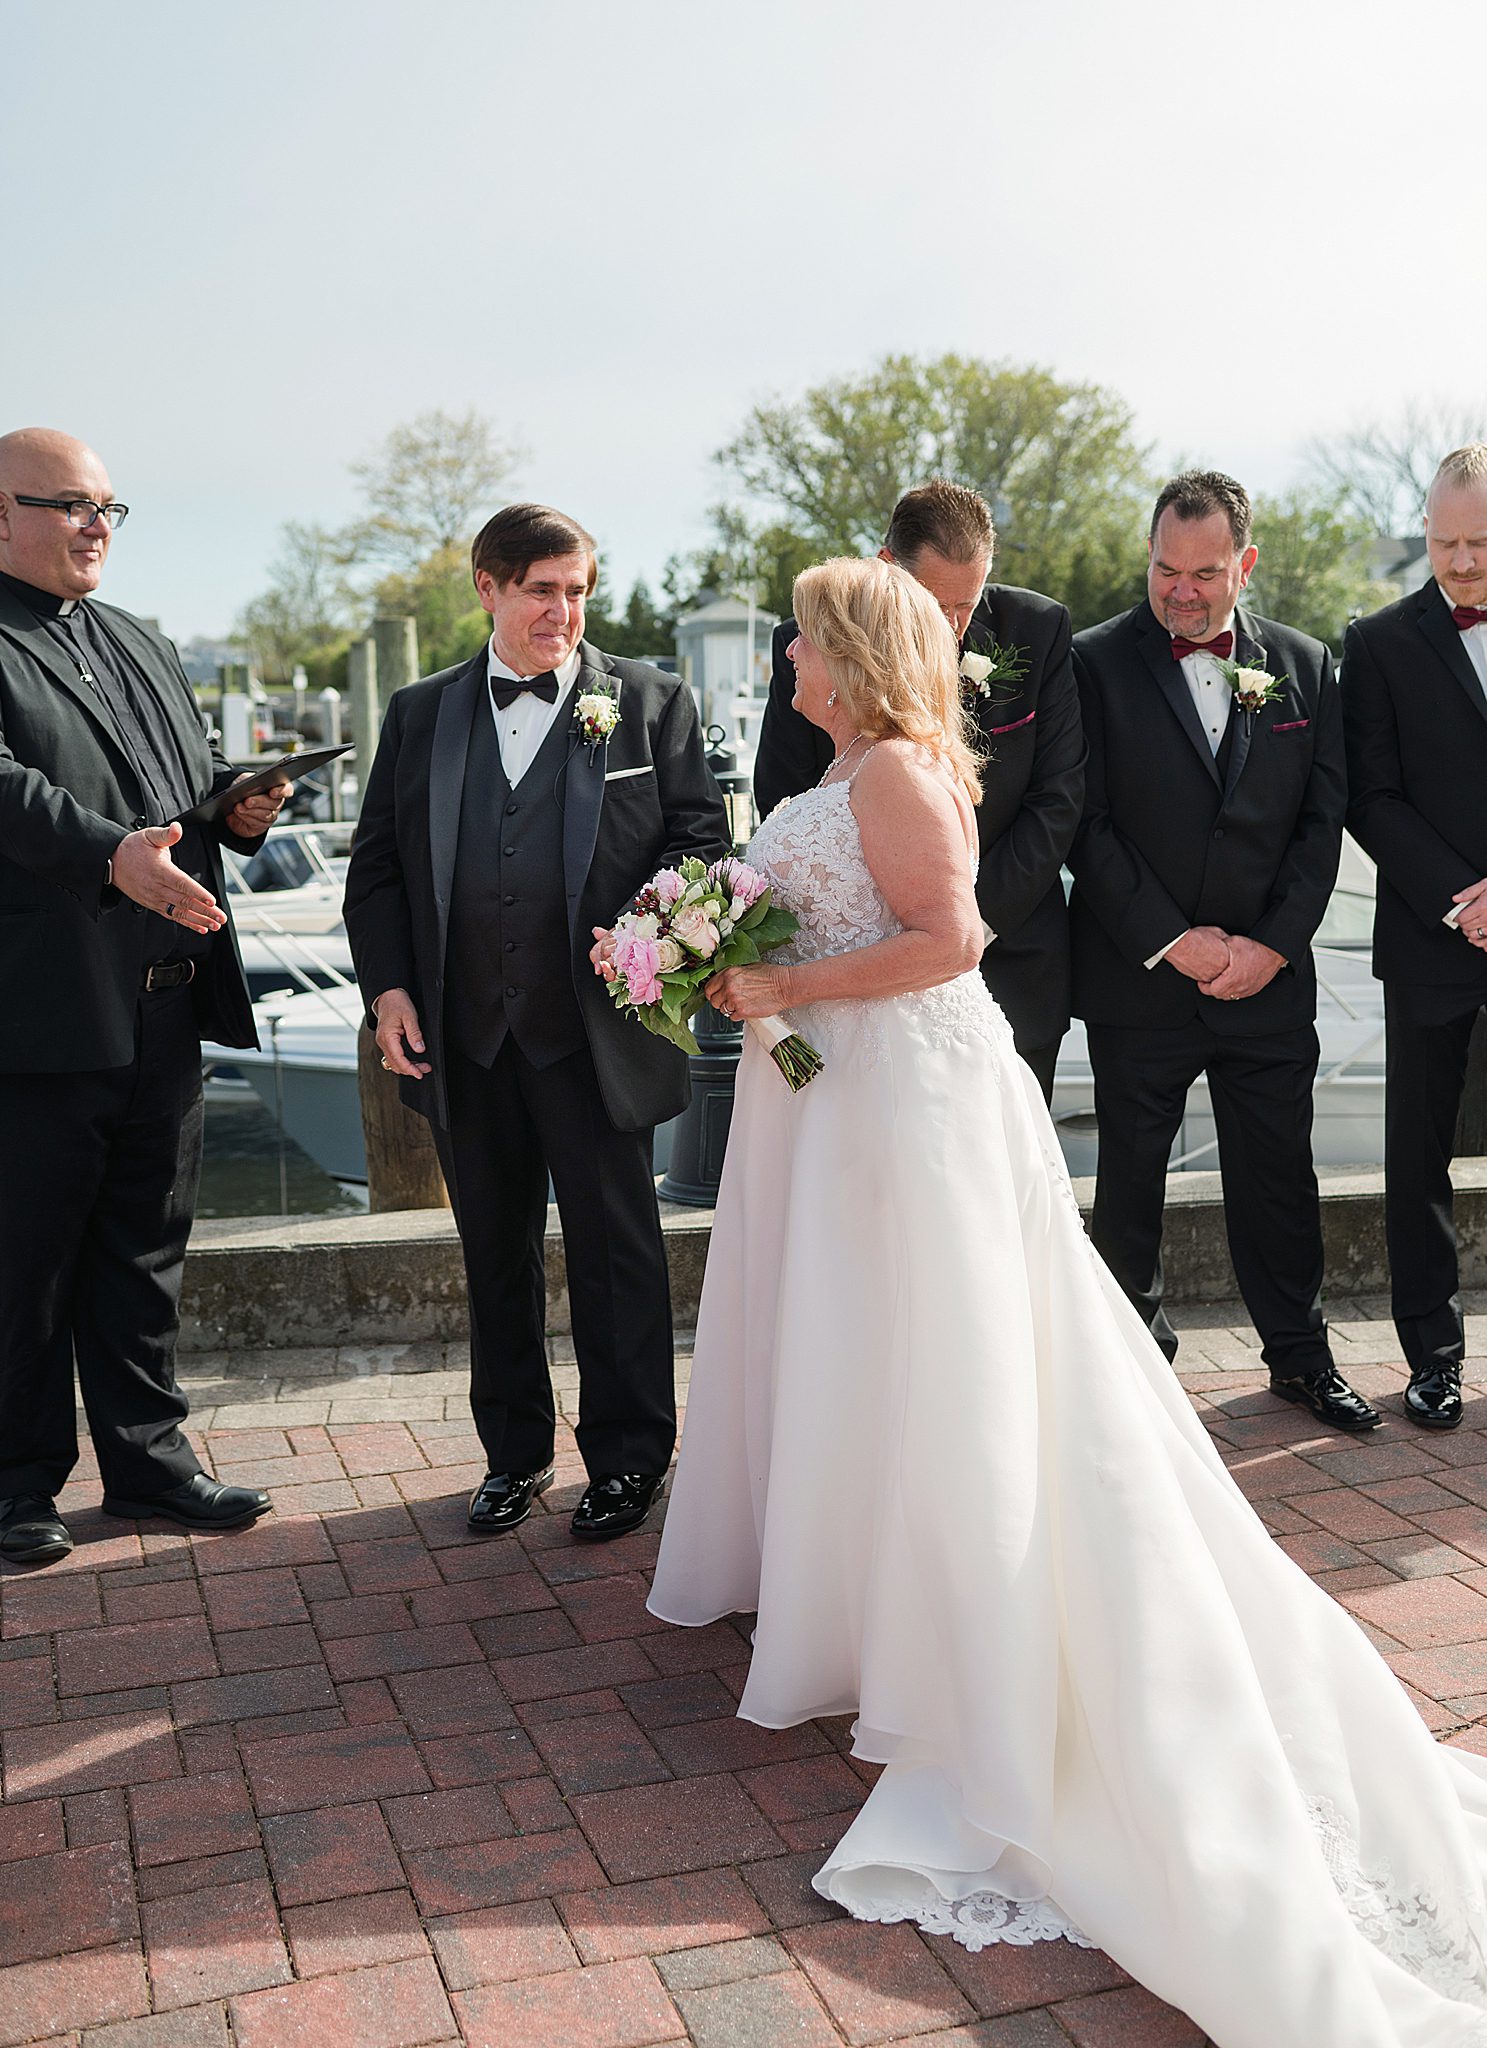 Saybrook Point Inn Wedding, Connecticut Photographer jesslancephoto